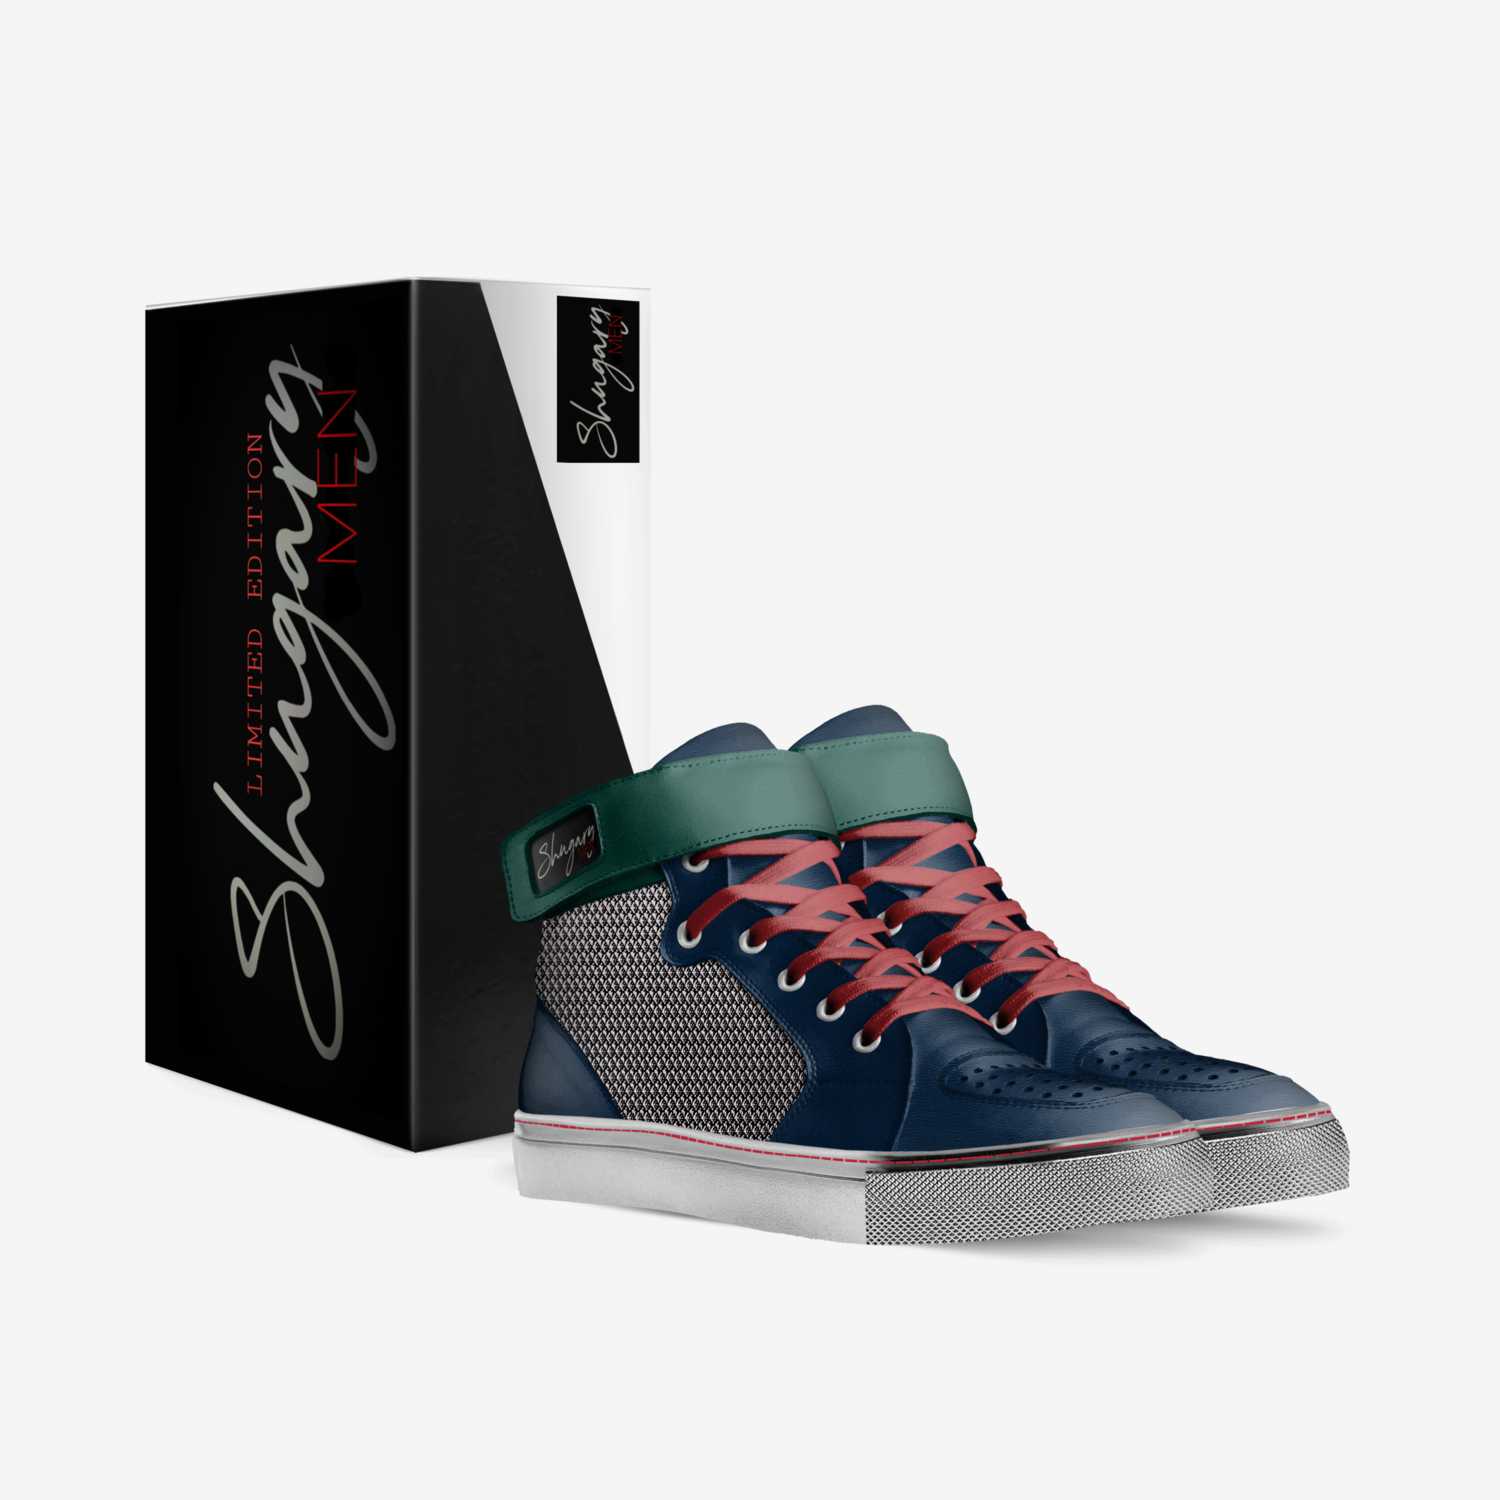 Shugary  custom made in Italy shoes by Malebogo Fologang | Box view